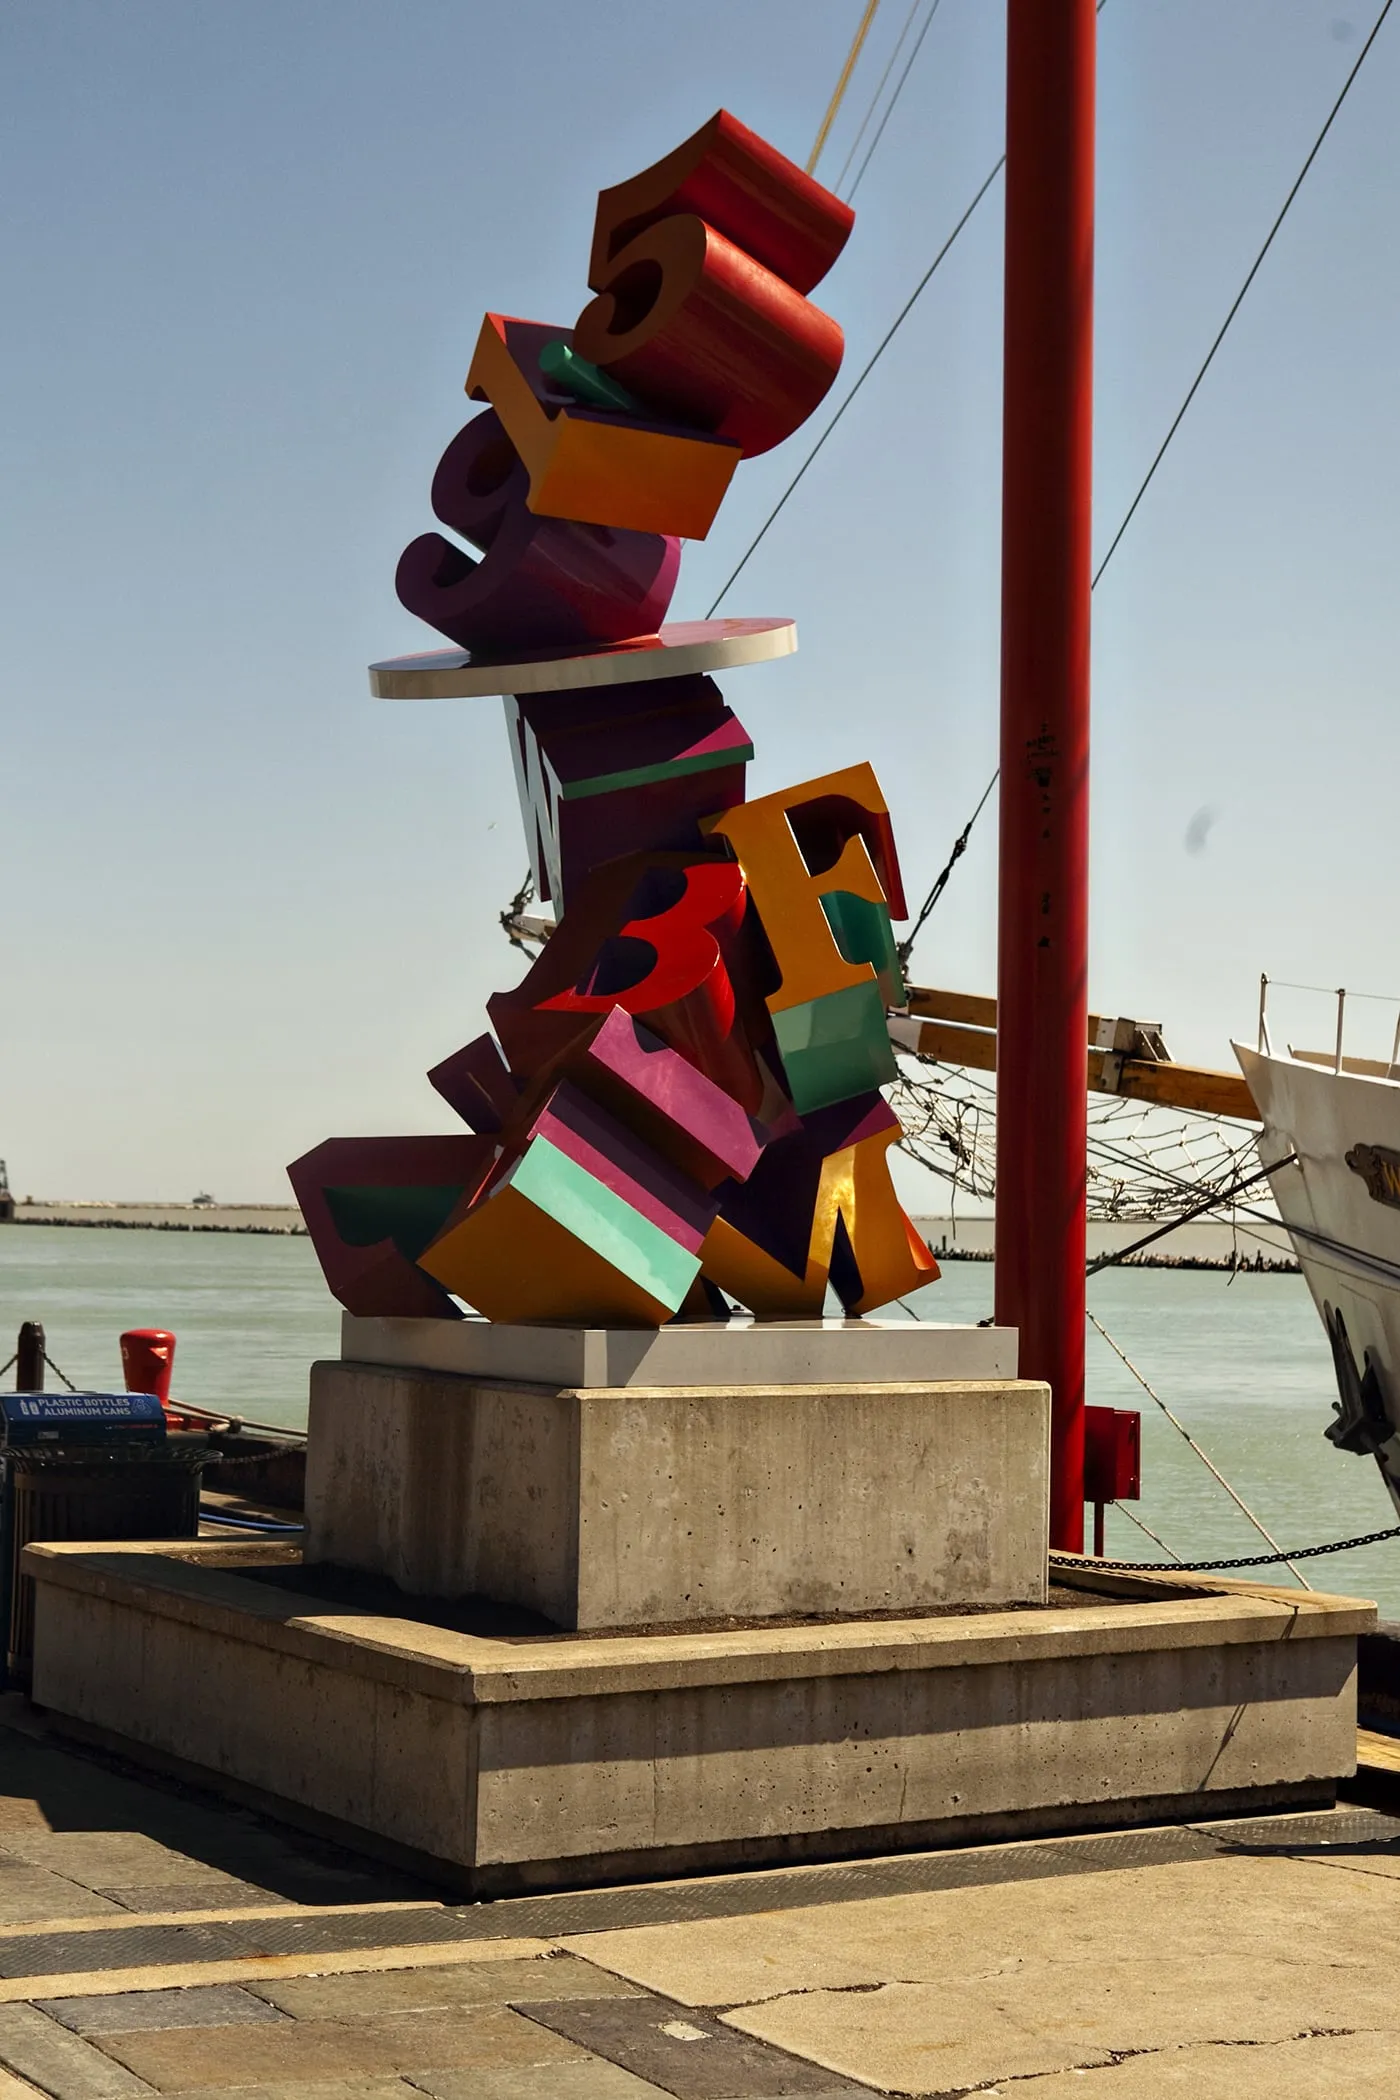 WBEZ Statue at Navy Pier in Chicago, Illinois